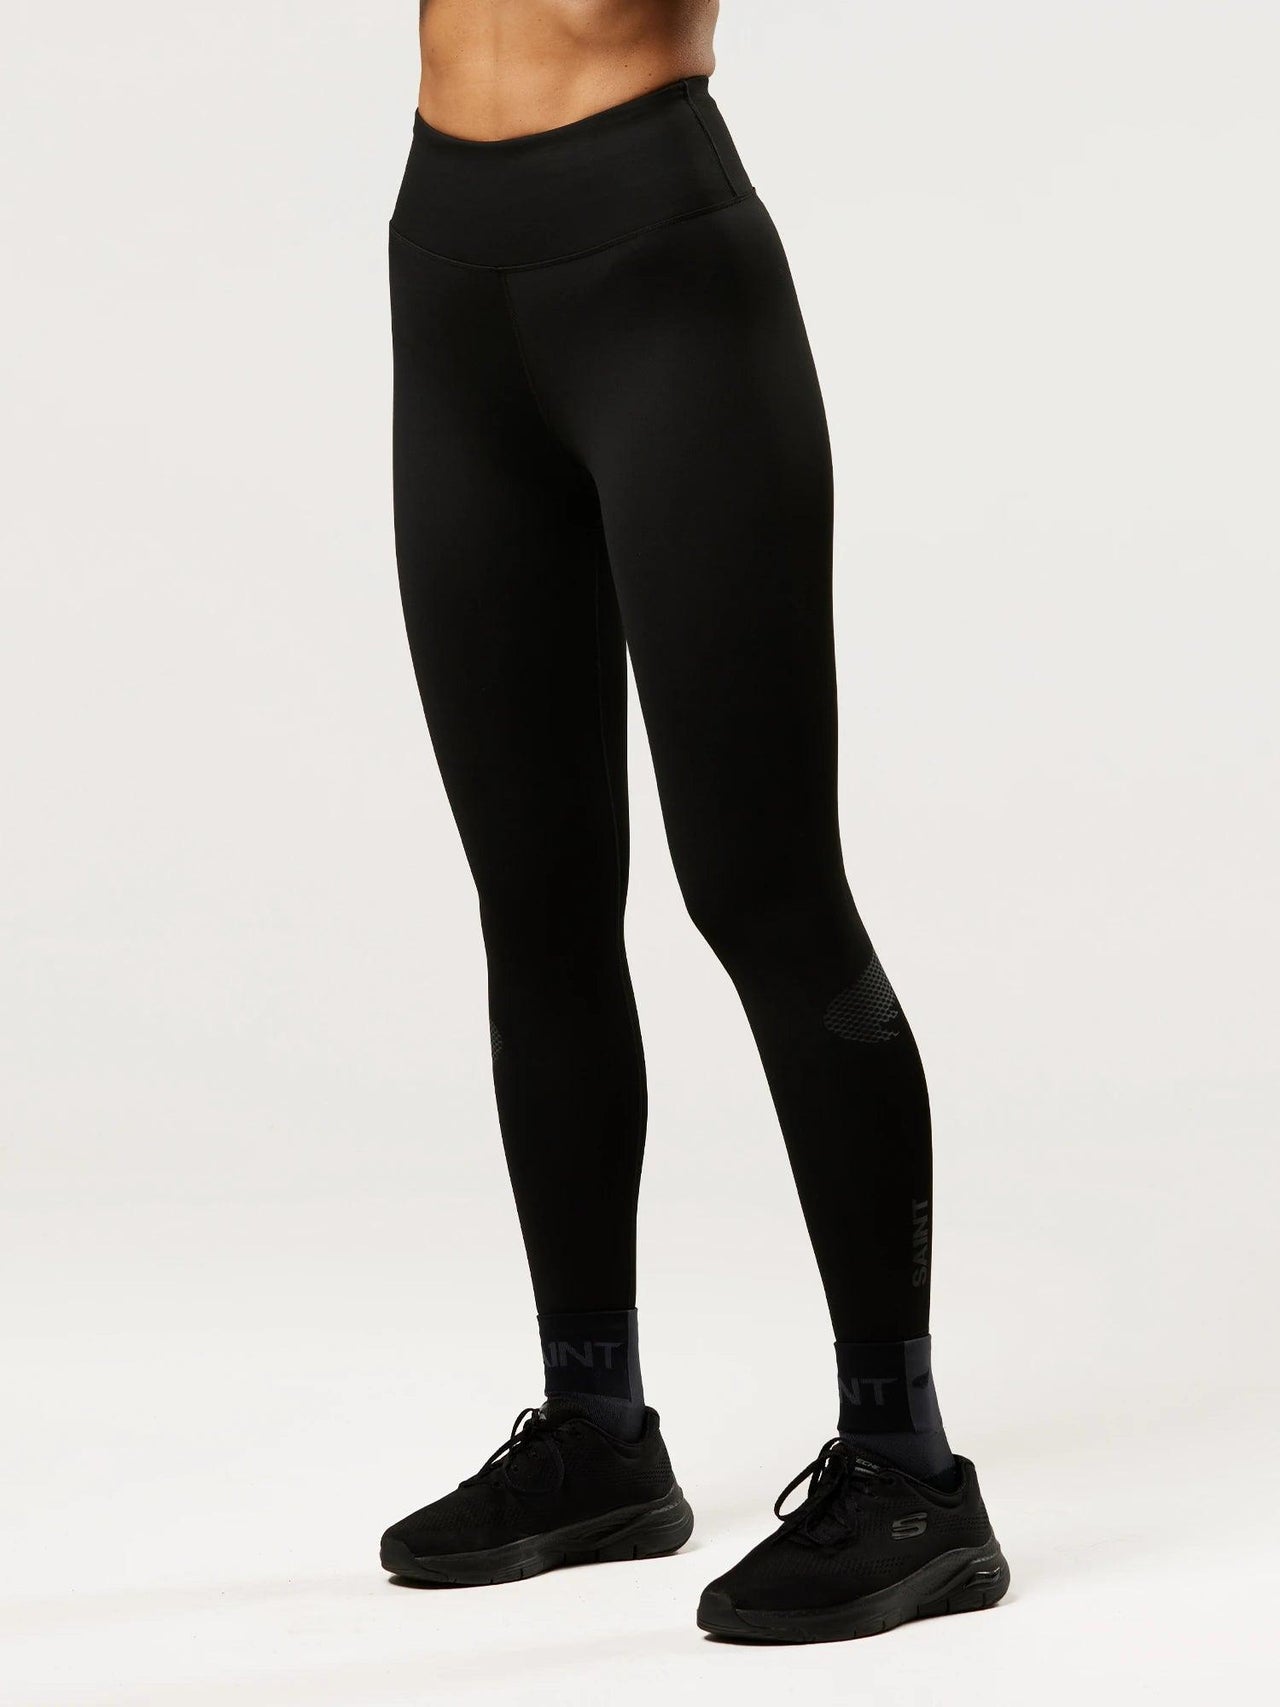 SAYFUT Women's Thermal Sweat suit Pants Athletic Stretch